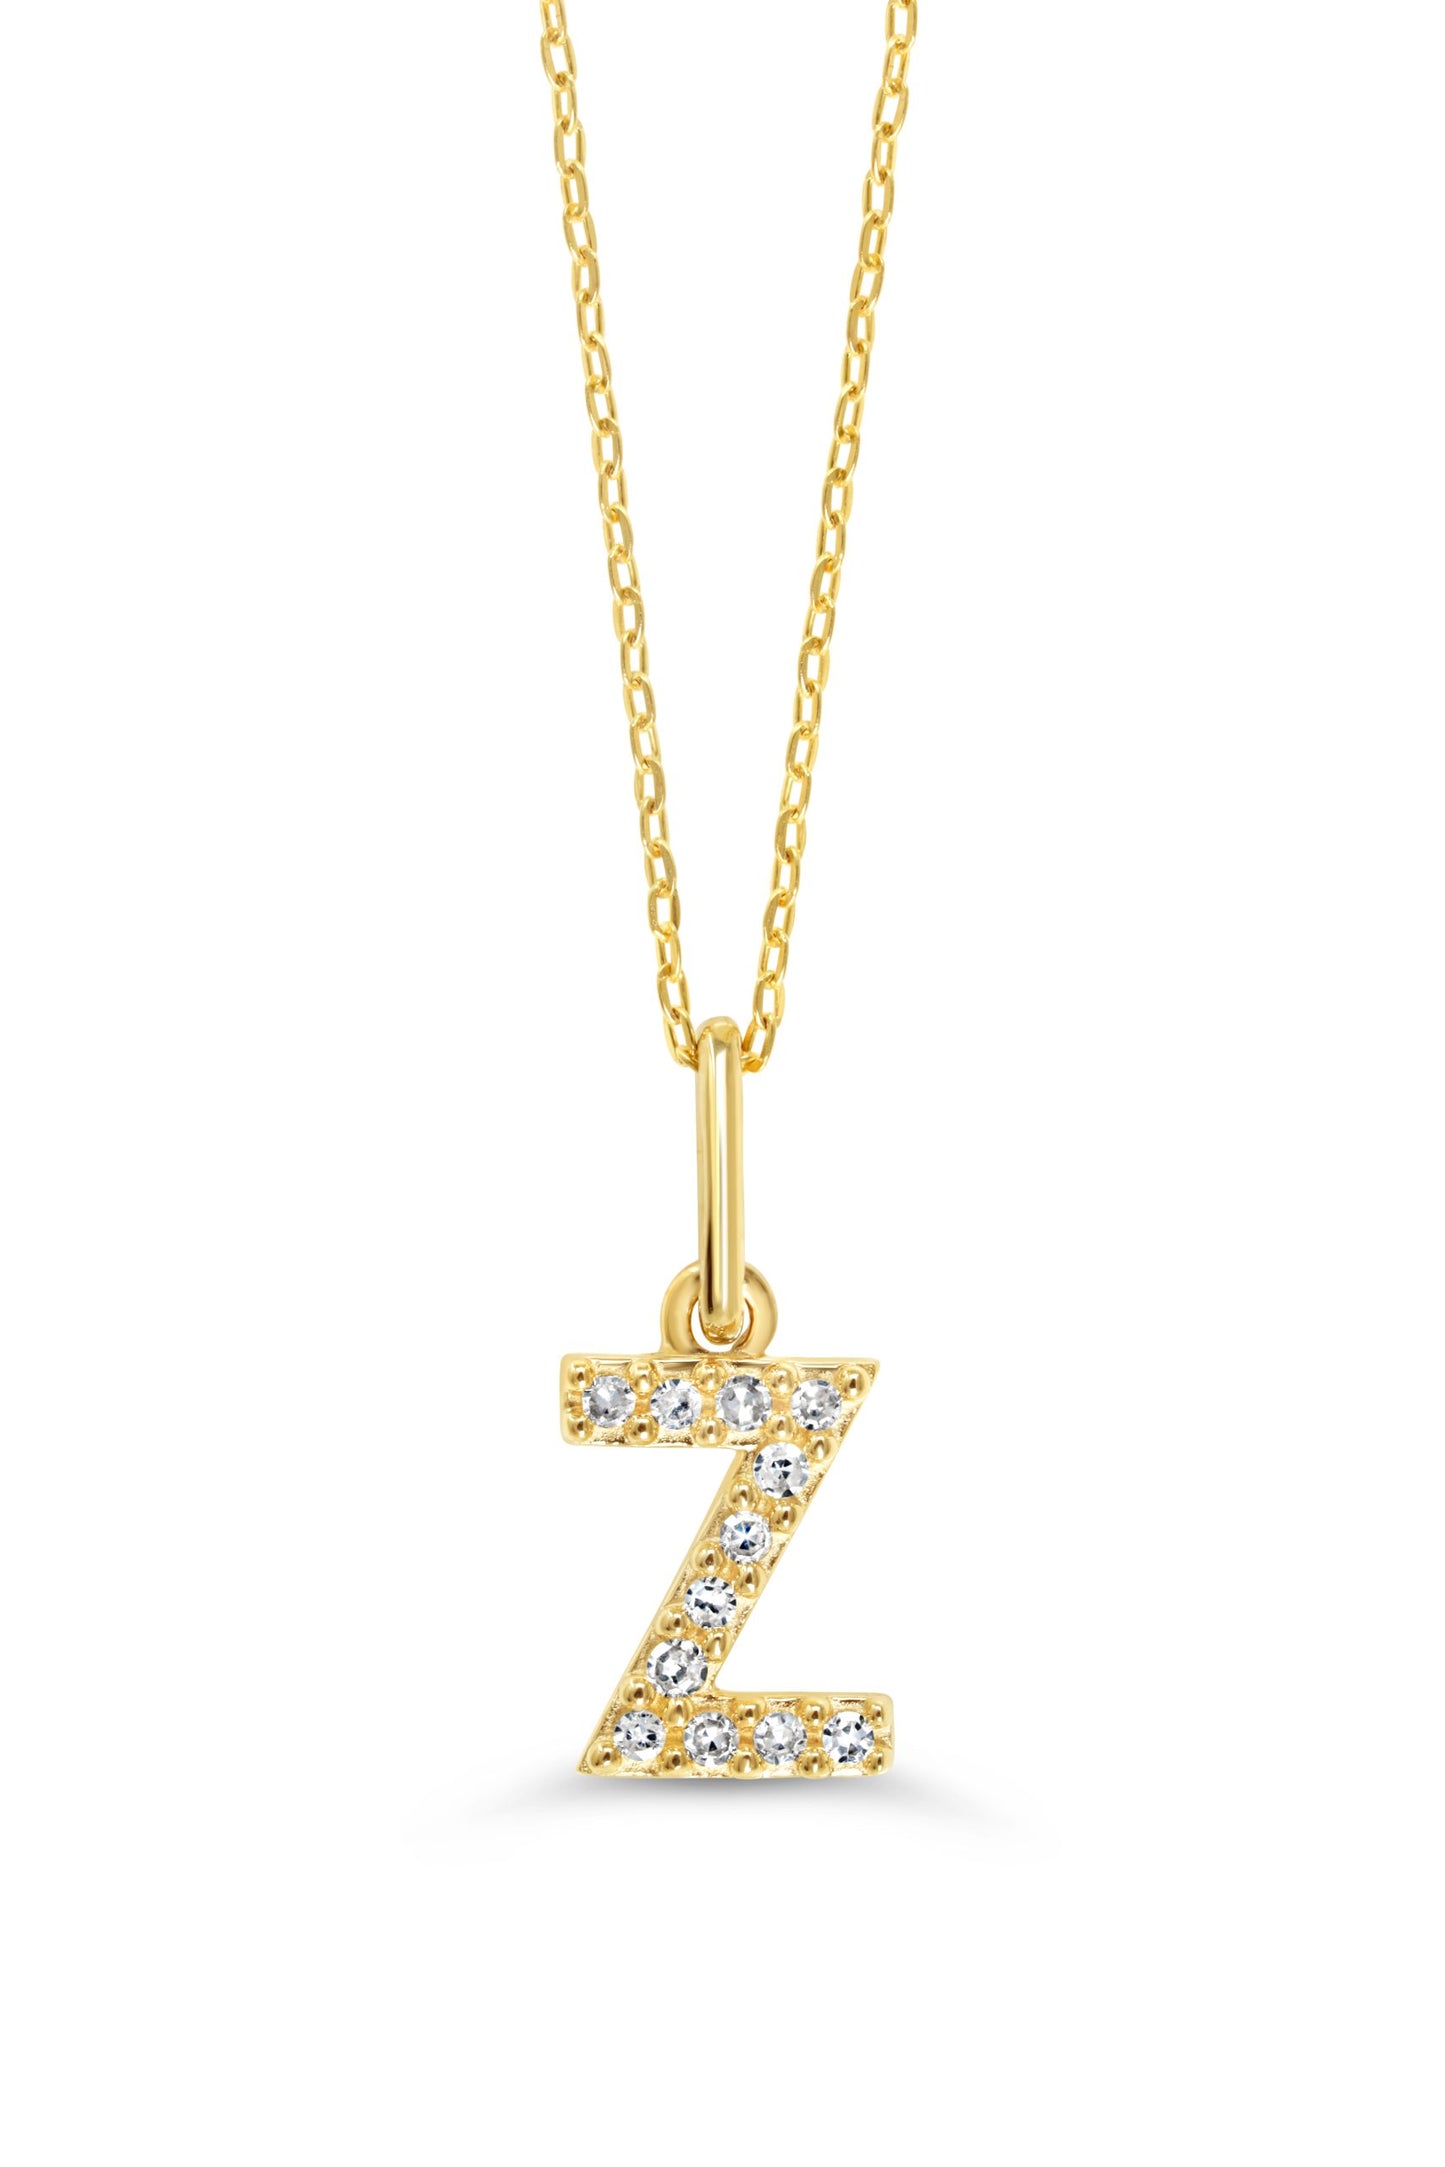 0.05 ct T.W. Diamonds "Z" Initial Pendant in 10K Yellow Gold